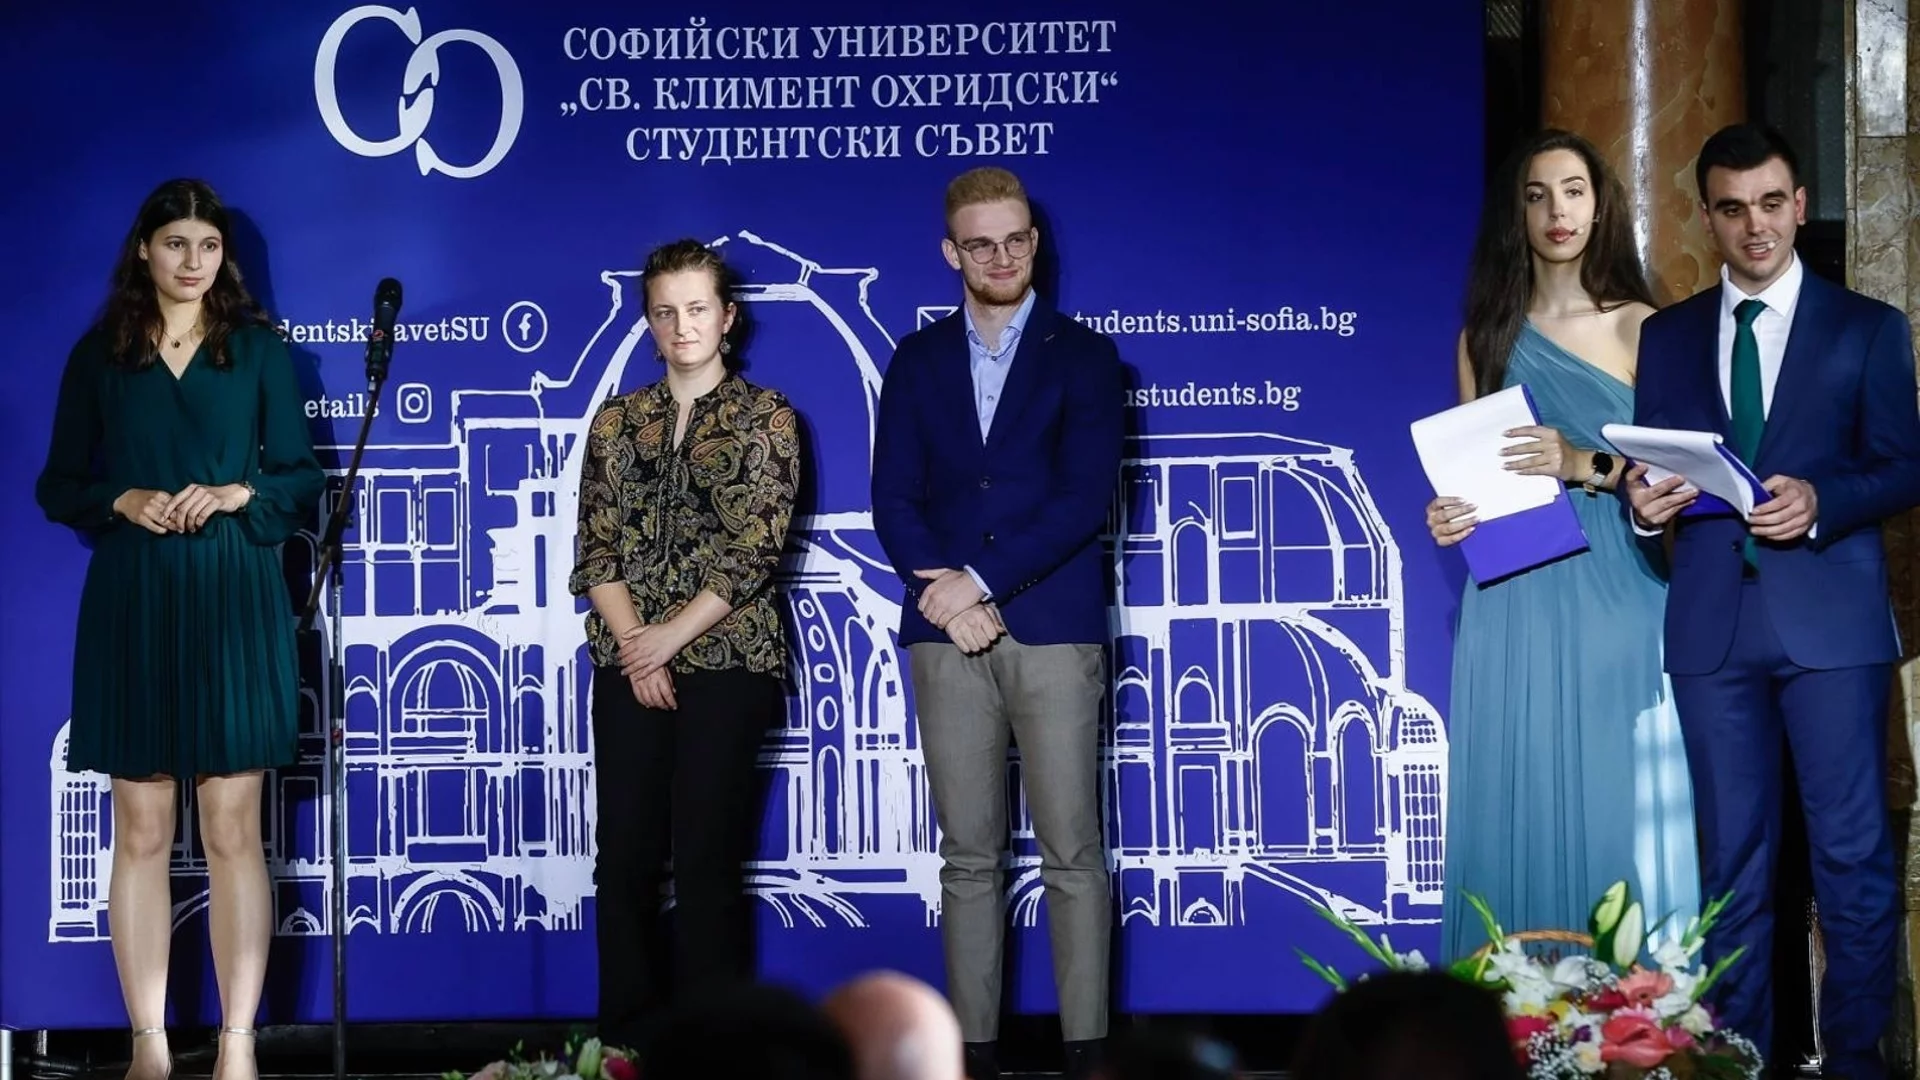 Връчиха наградите "Студент на годината" на СУ, Джем Юмеров от Actualno.com с престижно отличие (СНИМКИ)